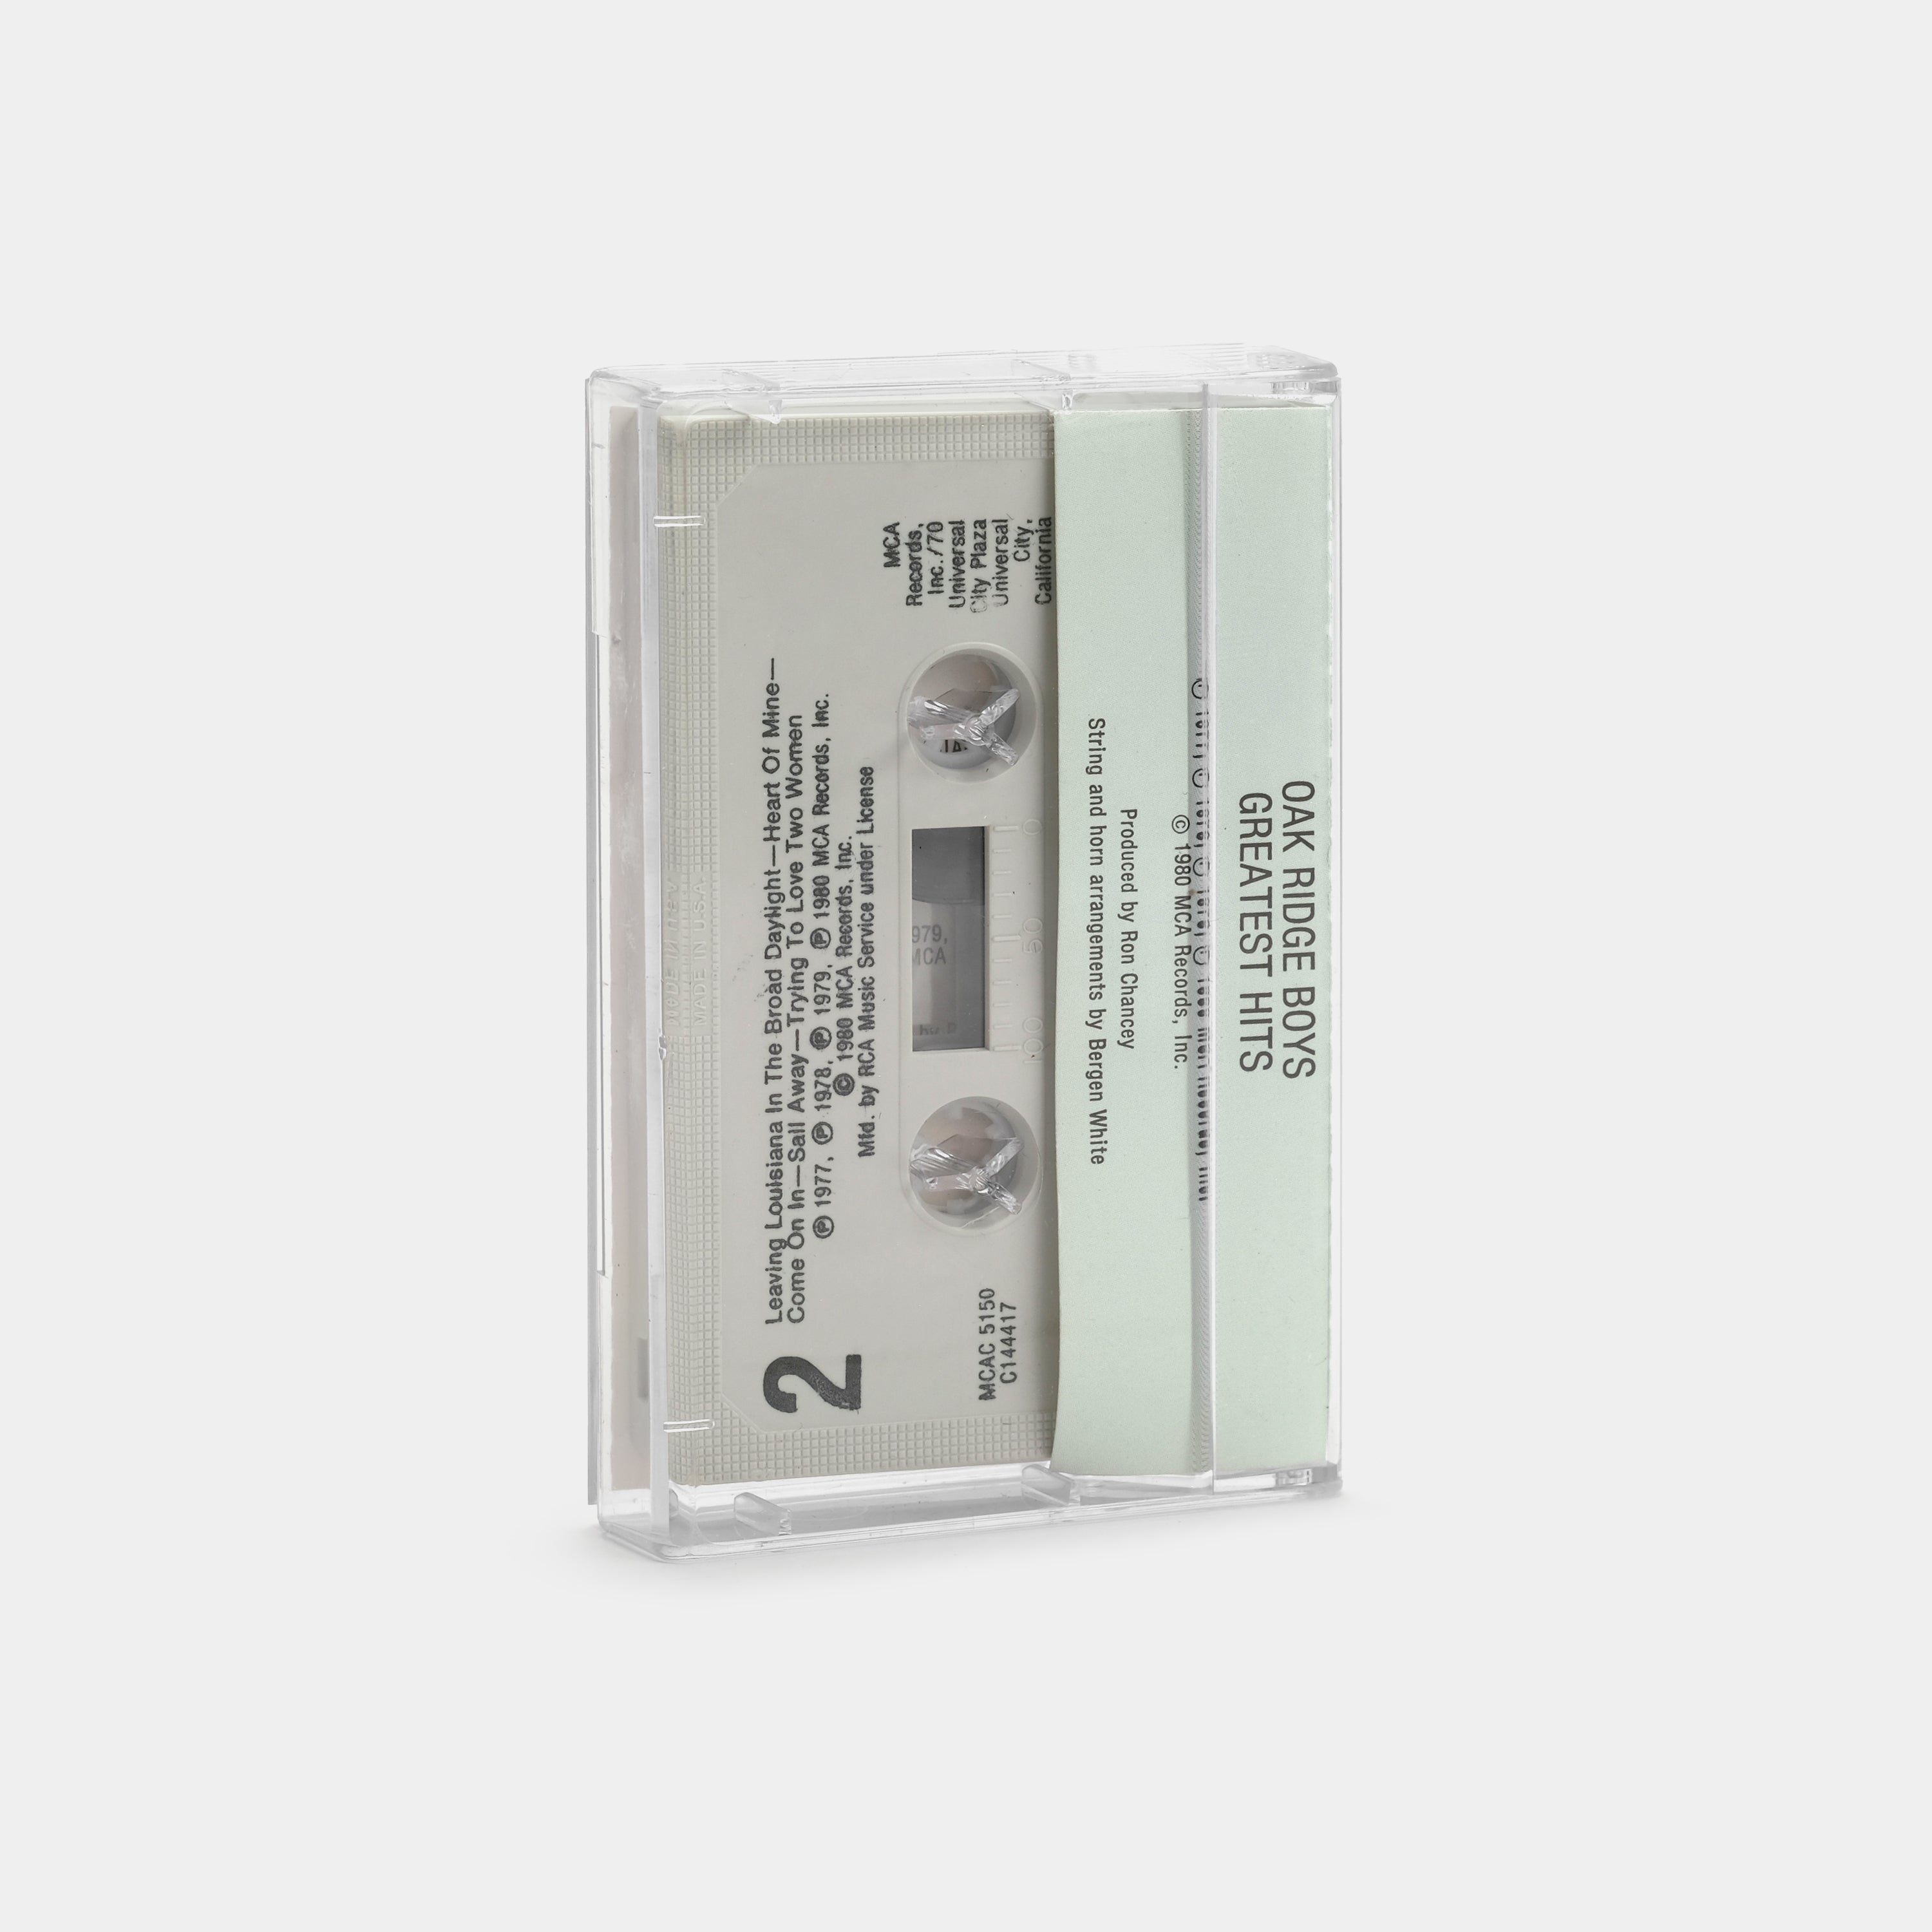 The Oak Ridge Boys - Greatest Hits Cassette Tape